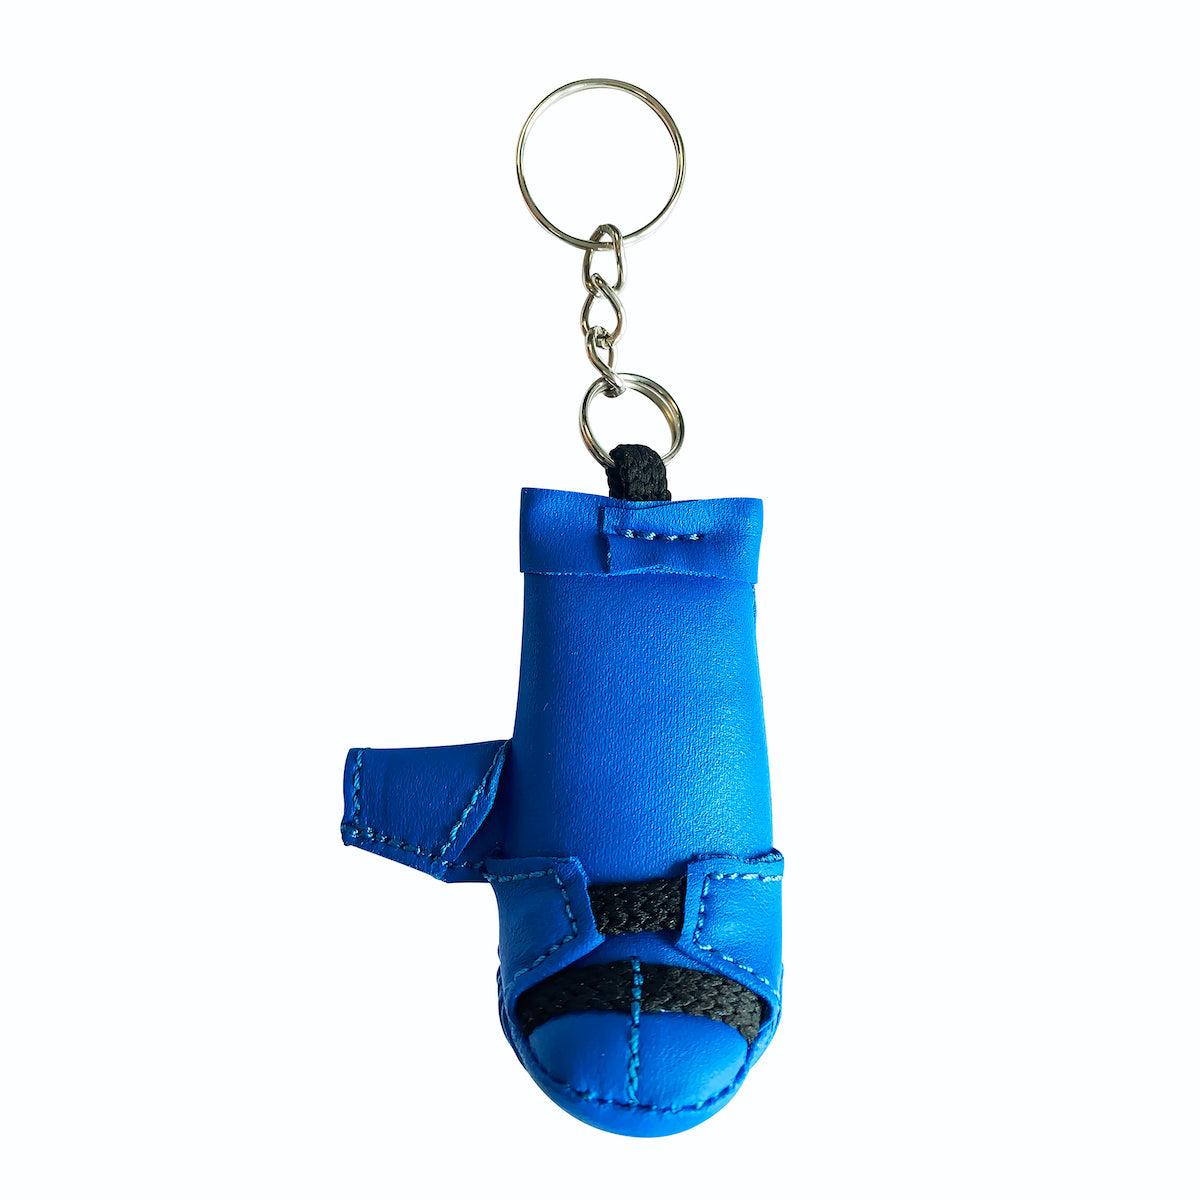 Porte-clés mini Mitaine de Karate Adidas (ADIGA03) - Bleu